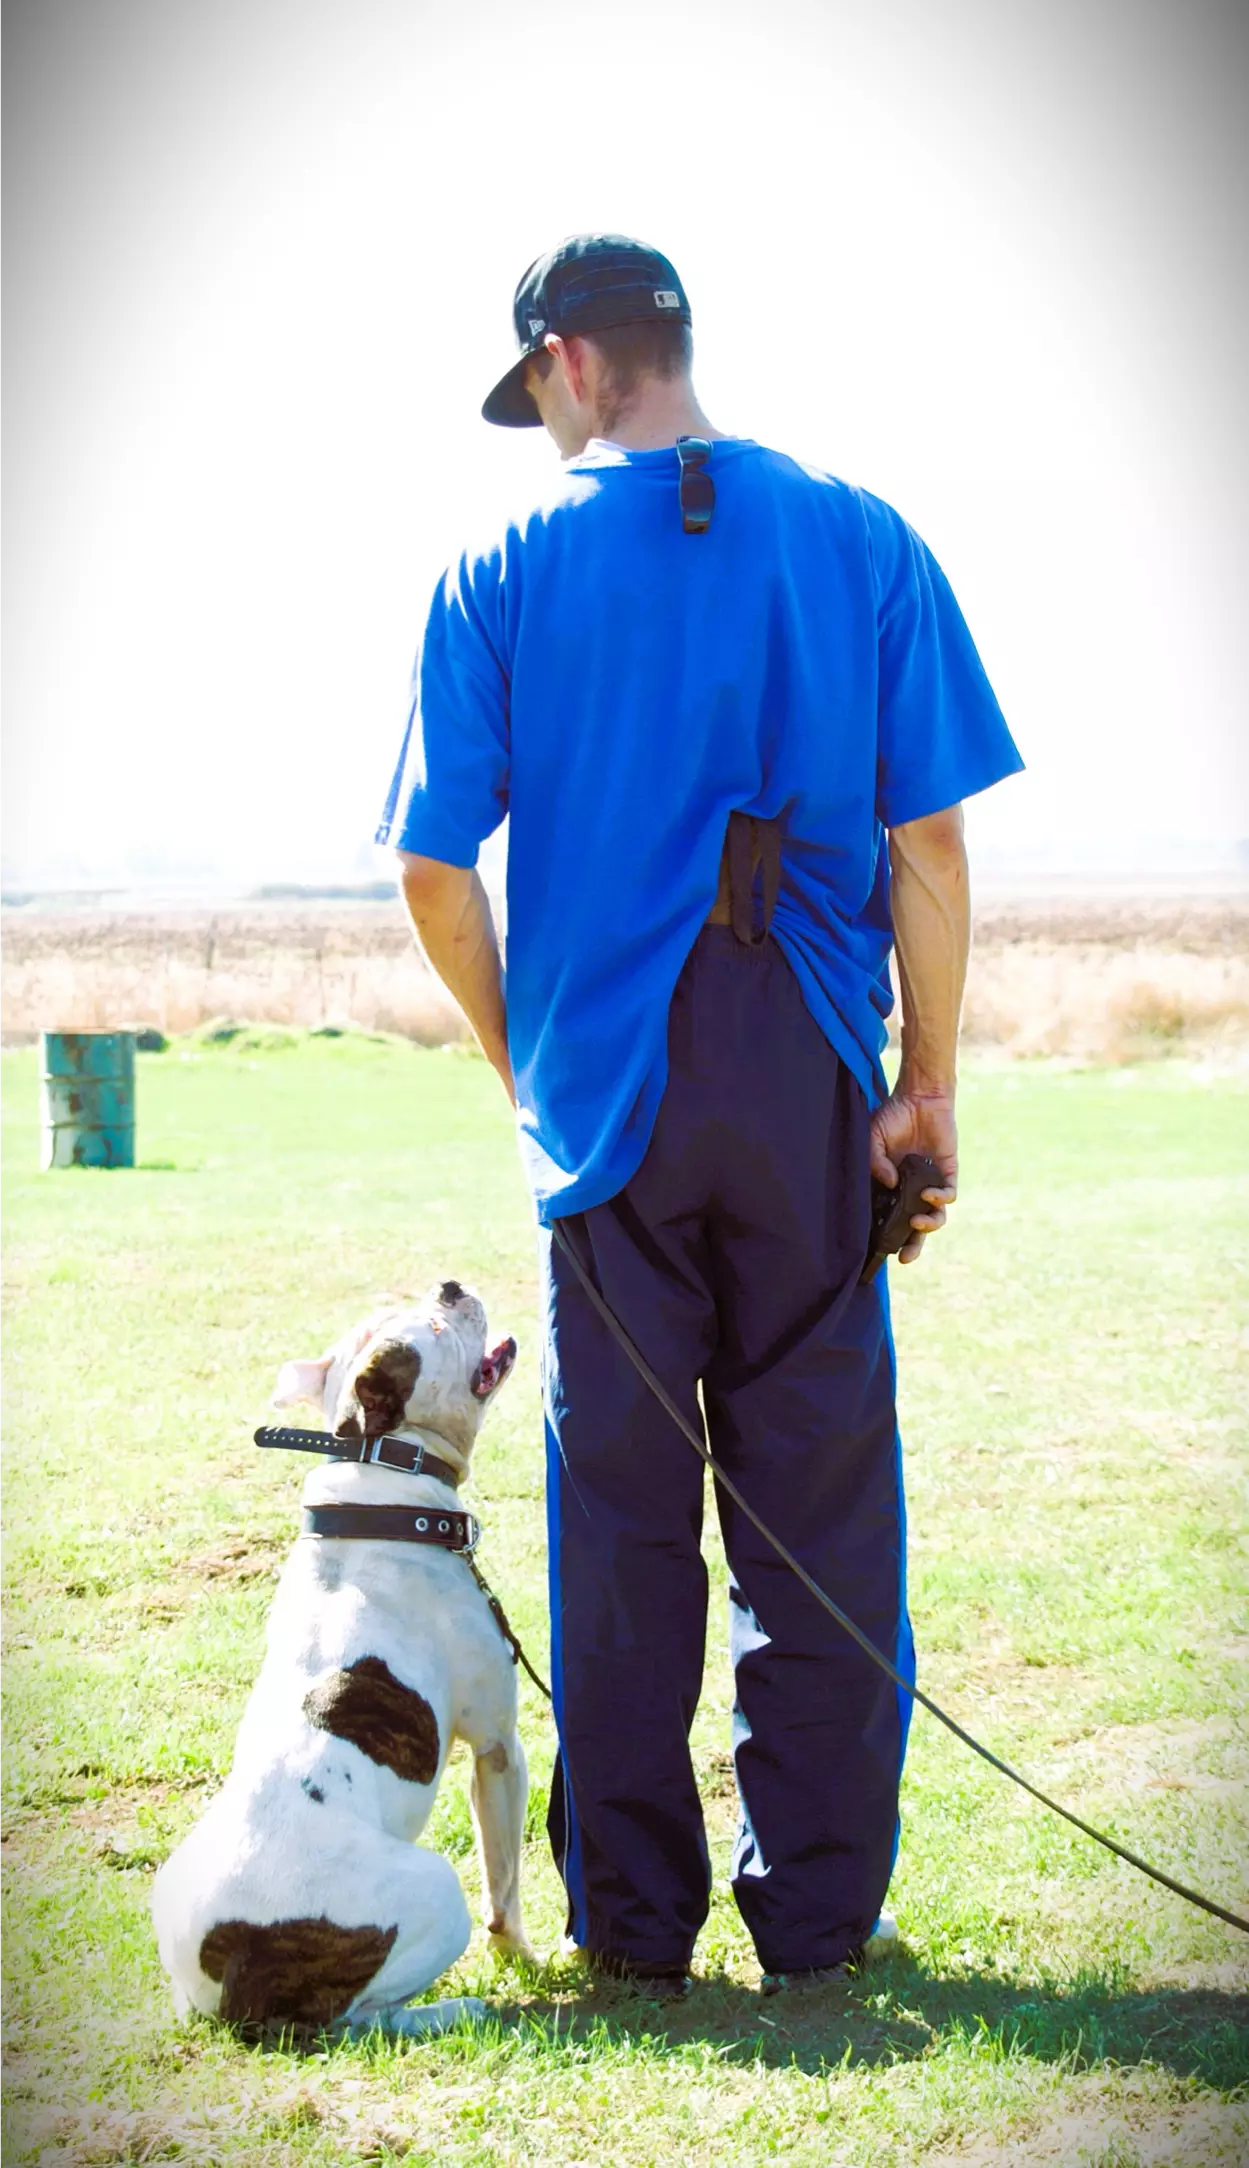 Man training dog in outdoor field.